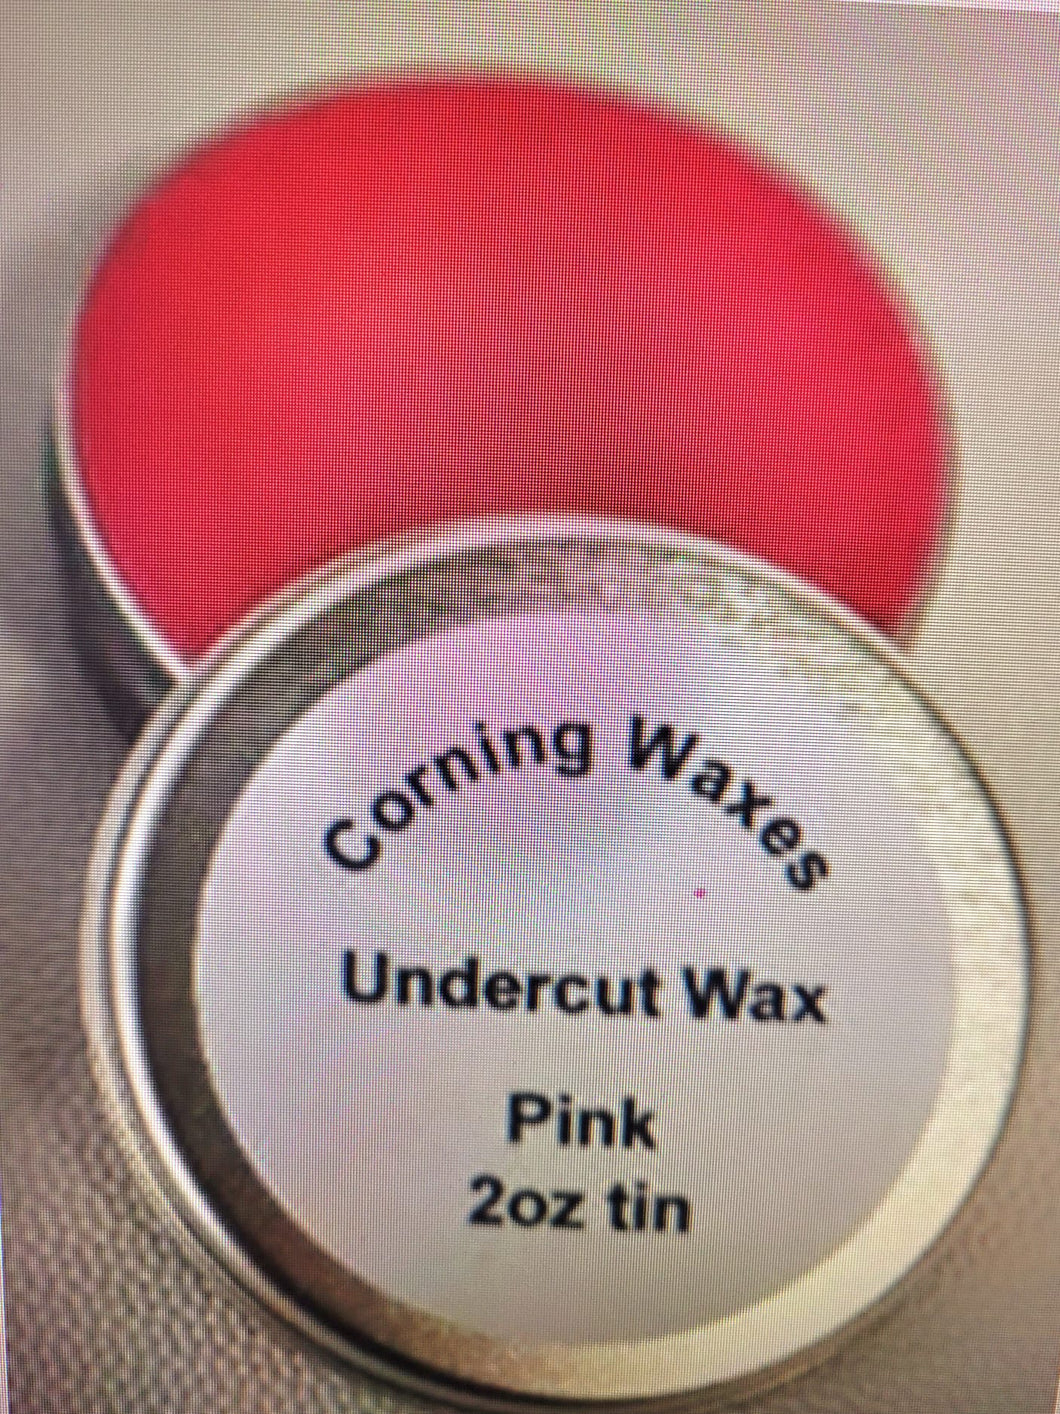 Corning Undercut wax Pink